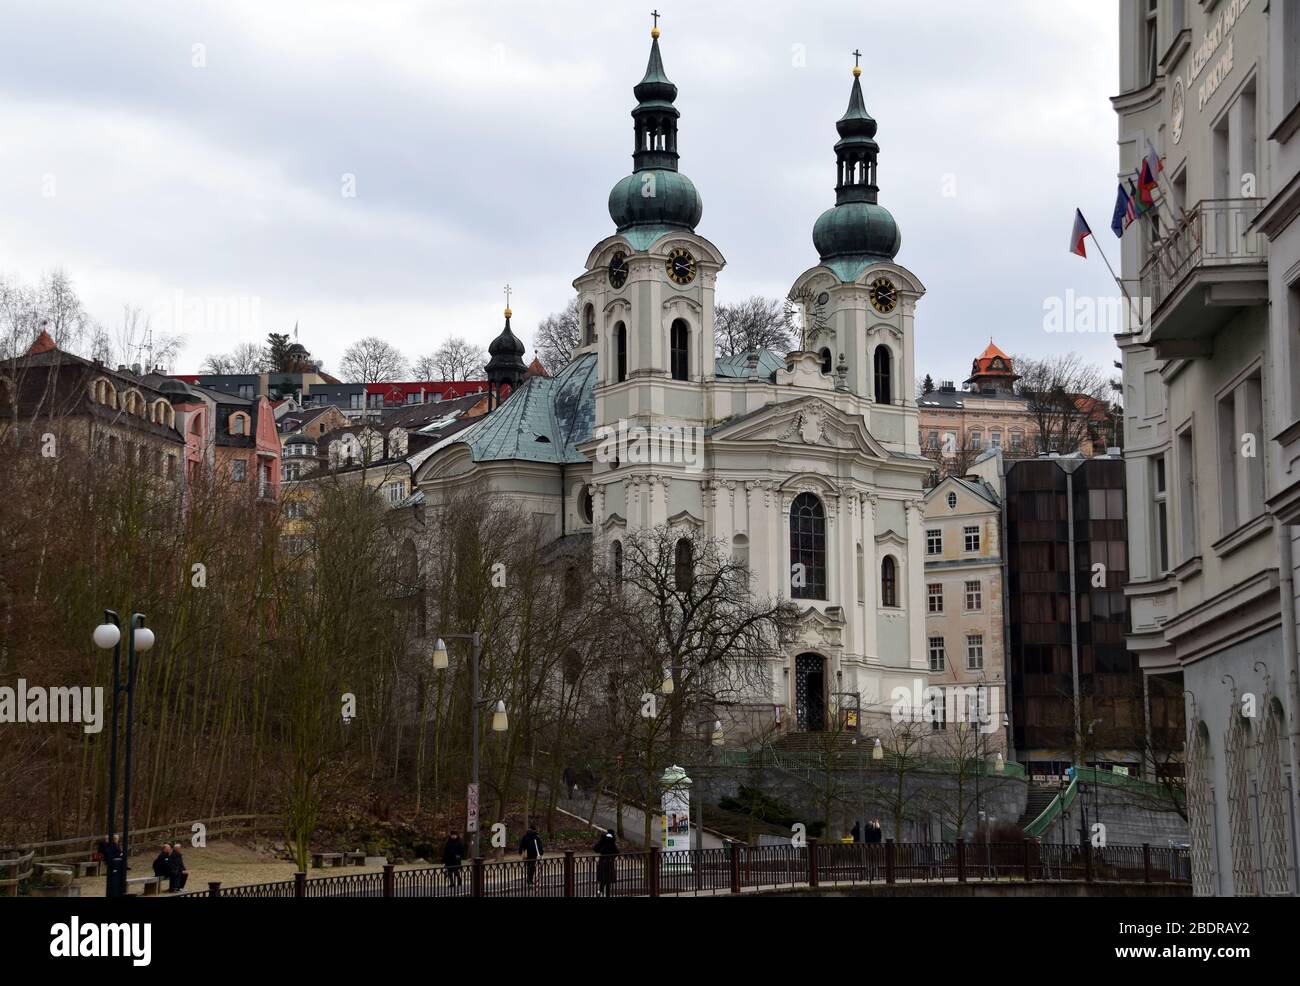 Katholische Pfarrkirche St.Maria Magdalena Karlovy Vary Tscechien Foto Stock